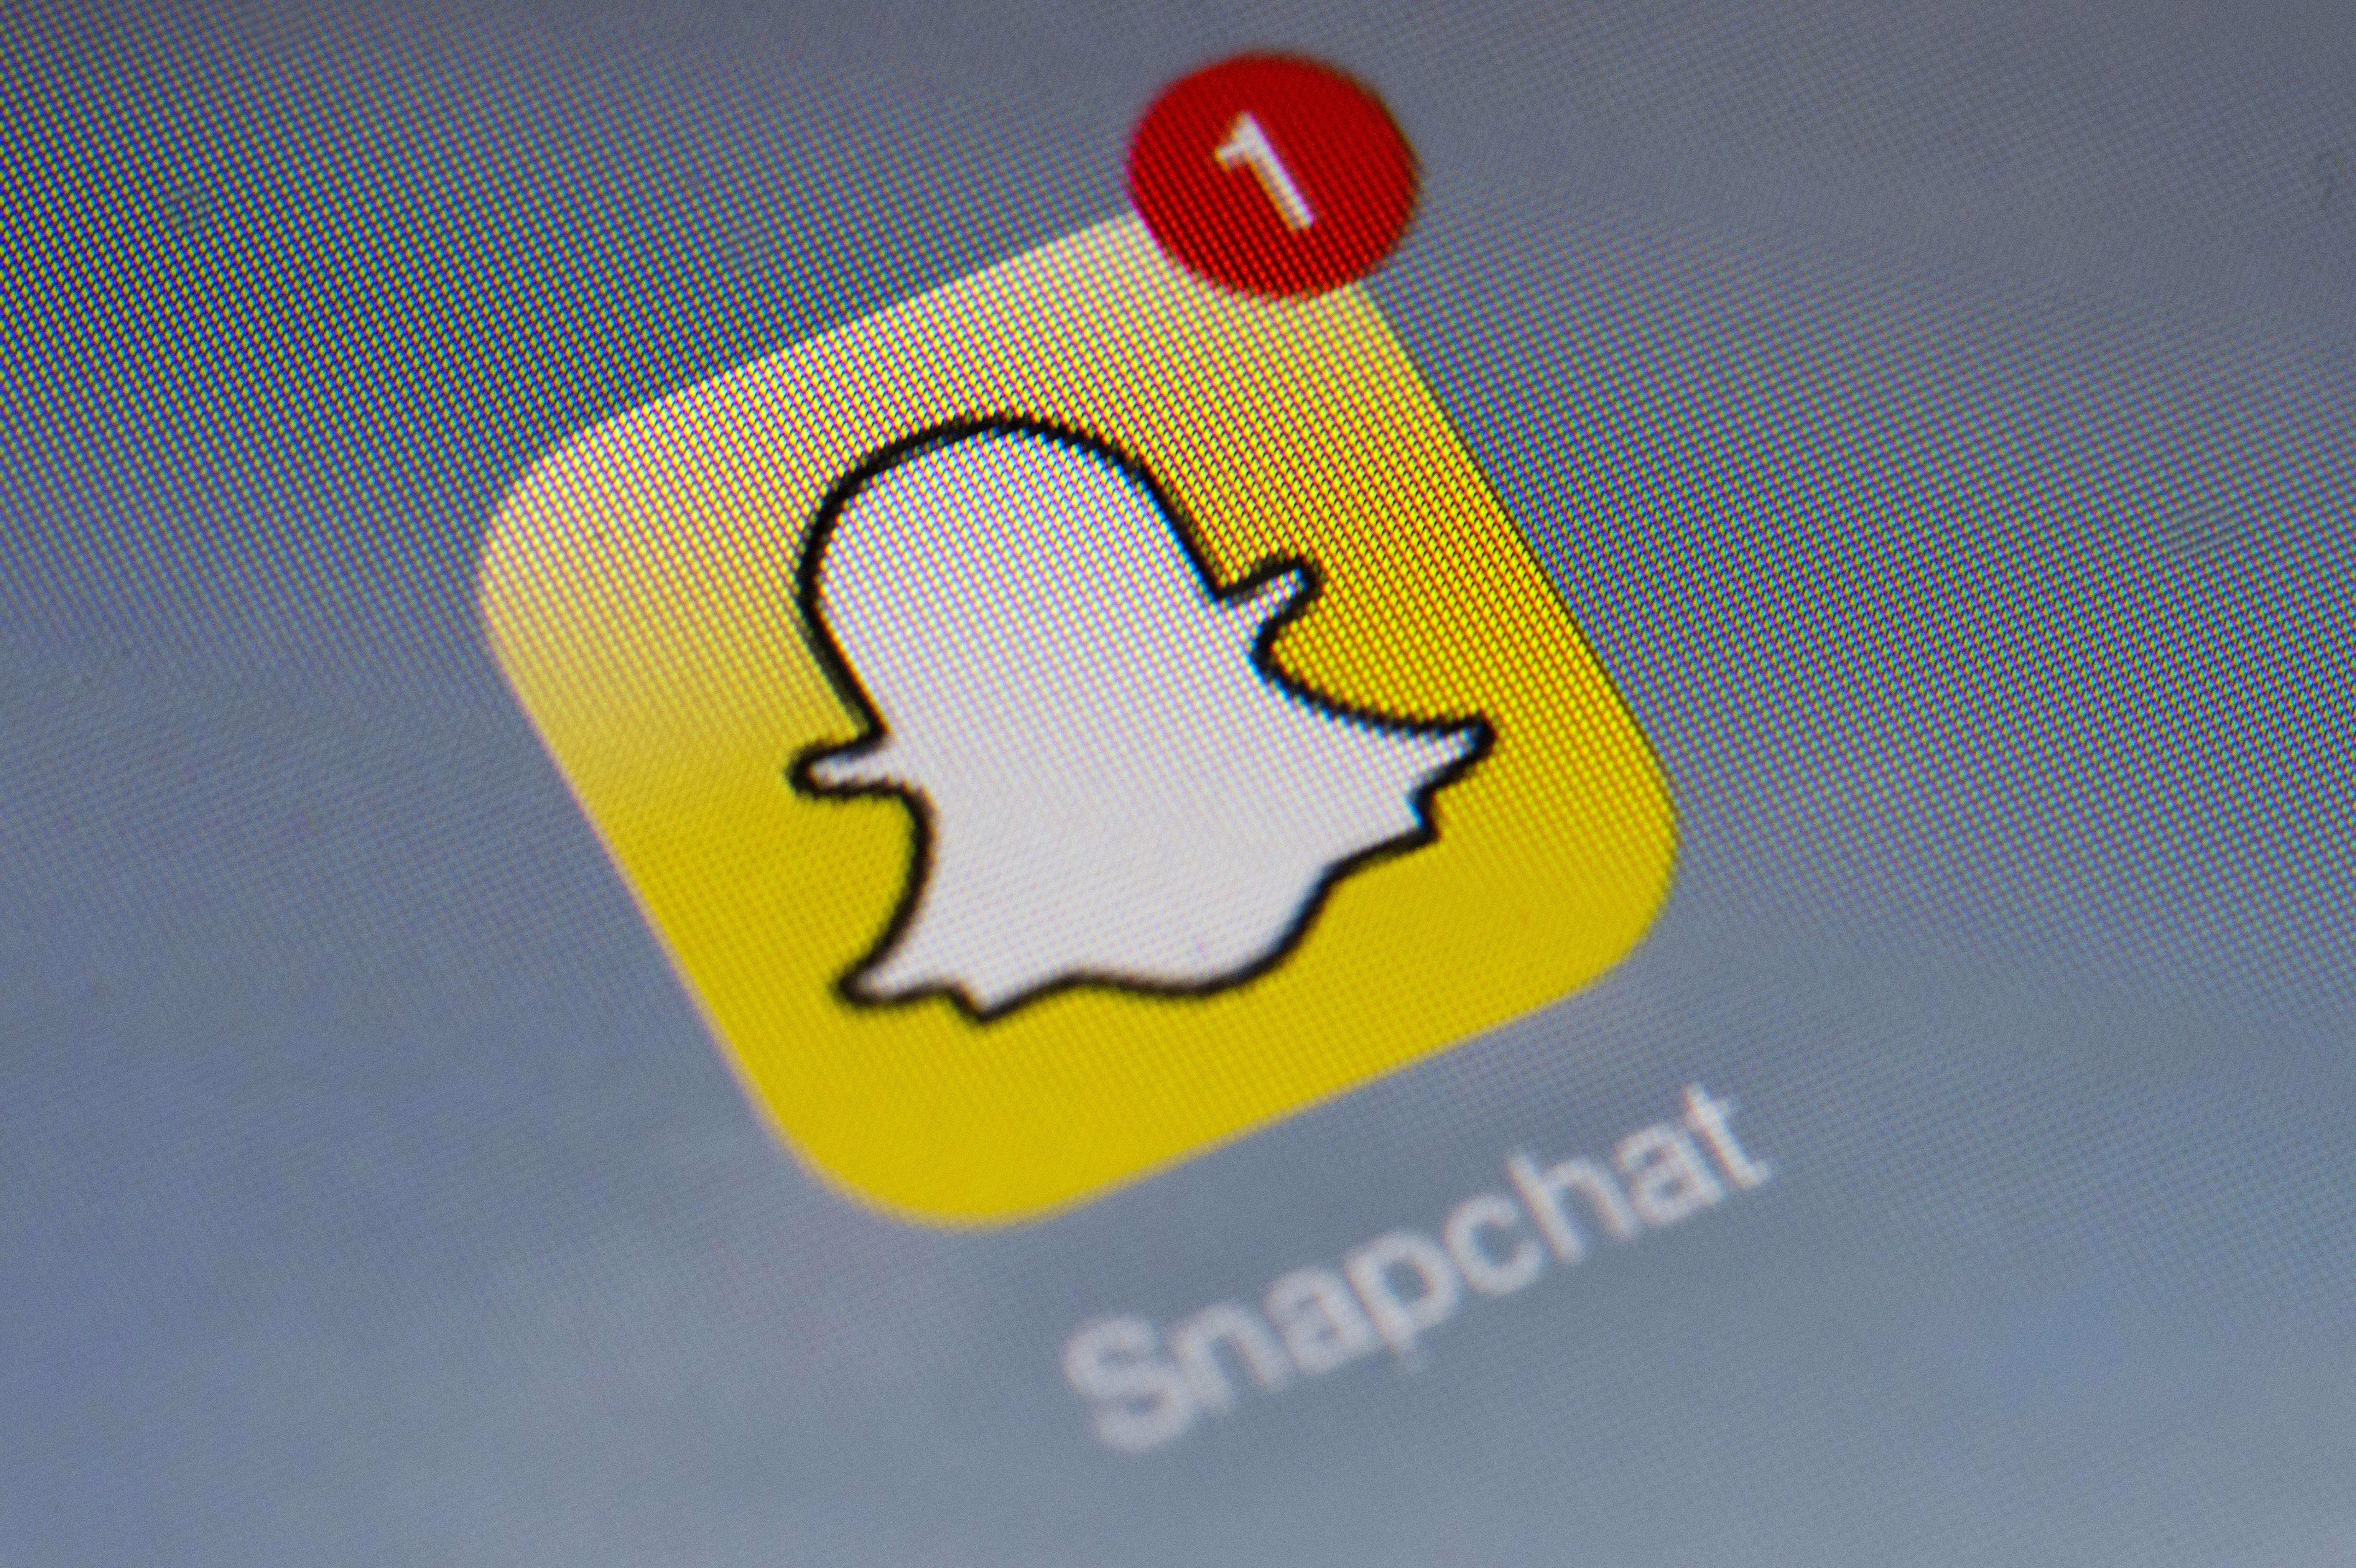 Pics leaked snapchat 200,000 Snapchat